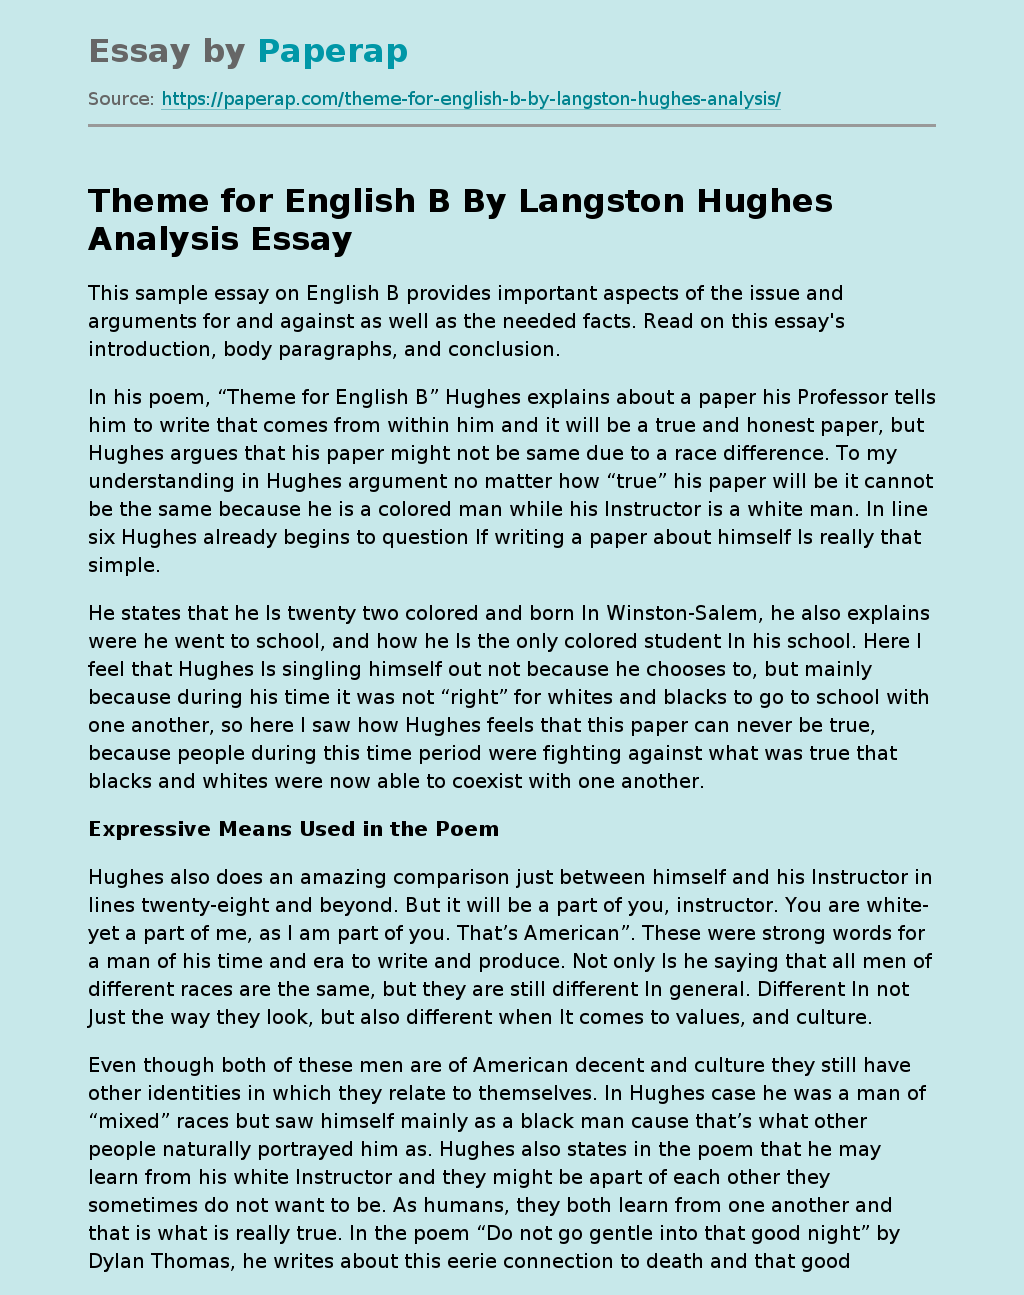 Theme for English B By Langston Hughes Analysis